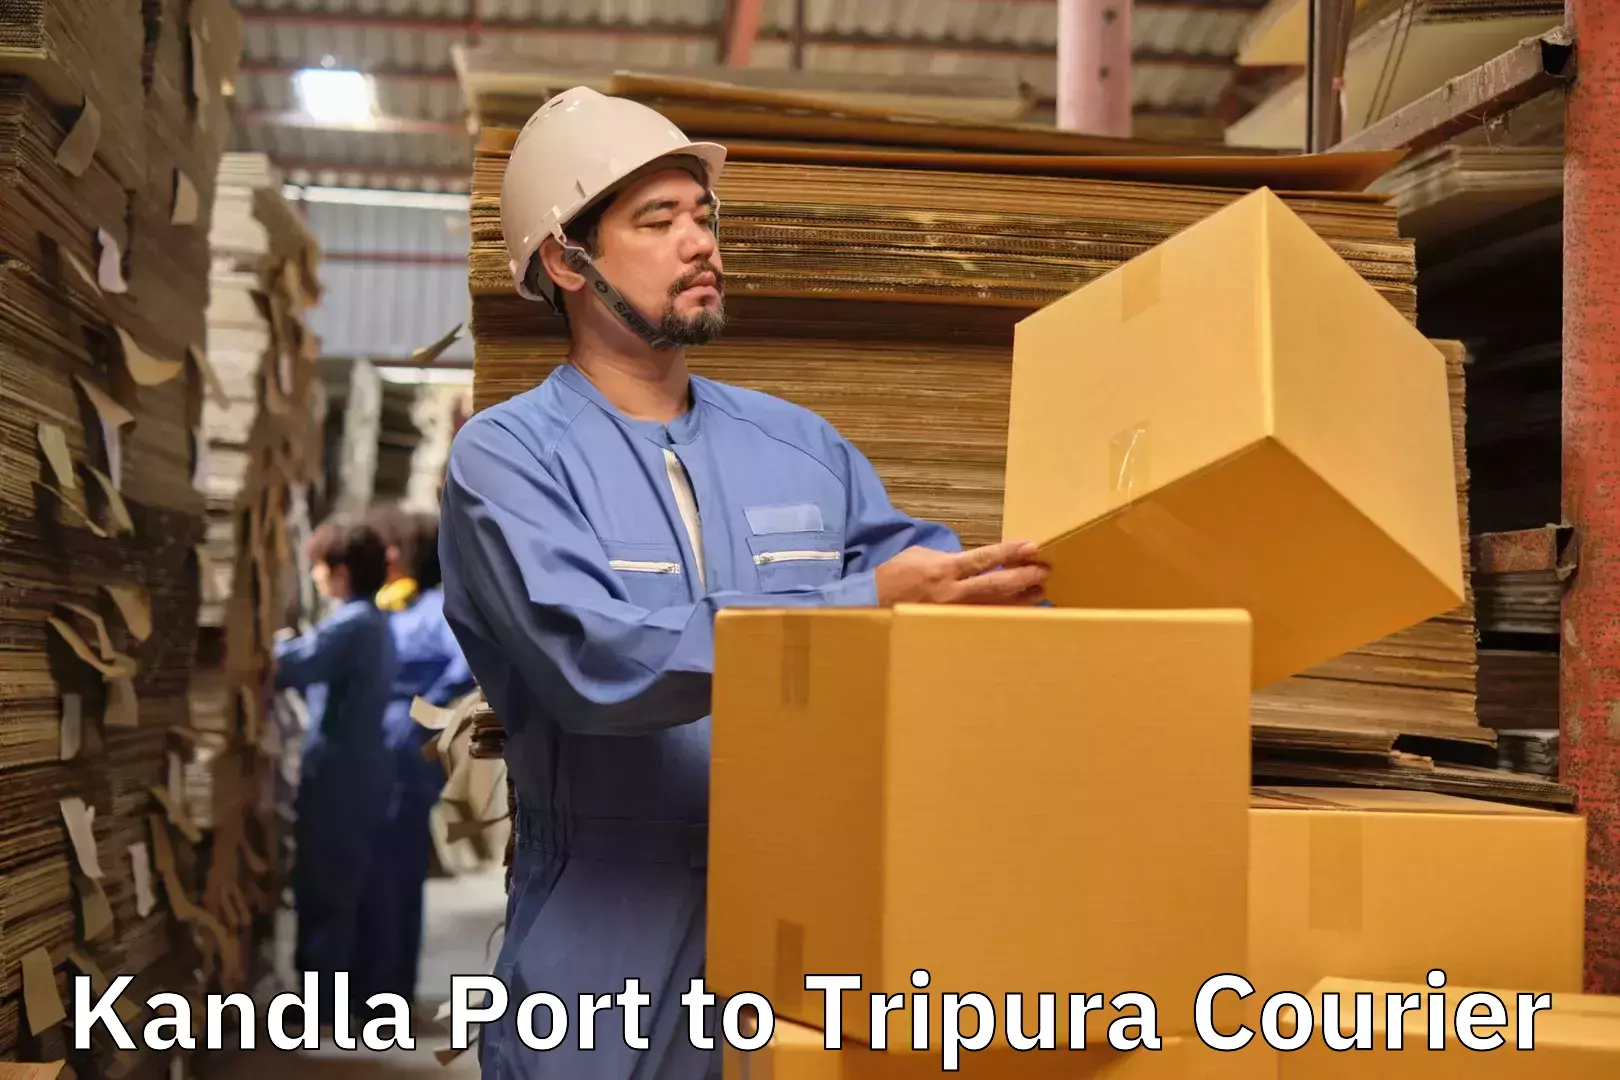 Express luggage delivery Kandla Port to Udaipur Tripura